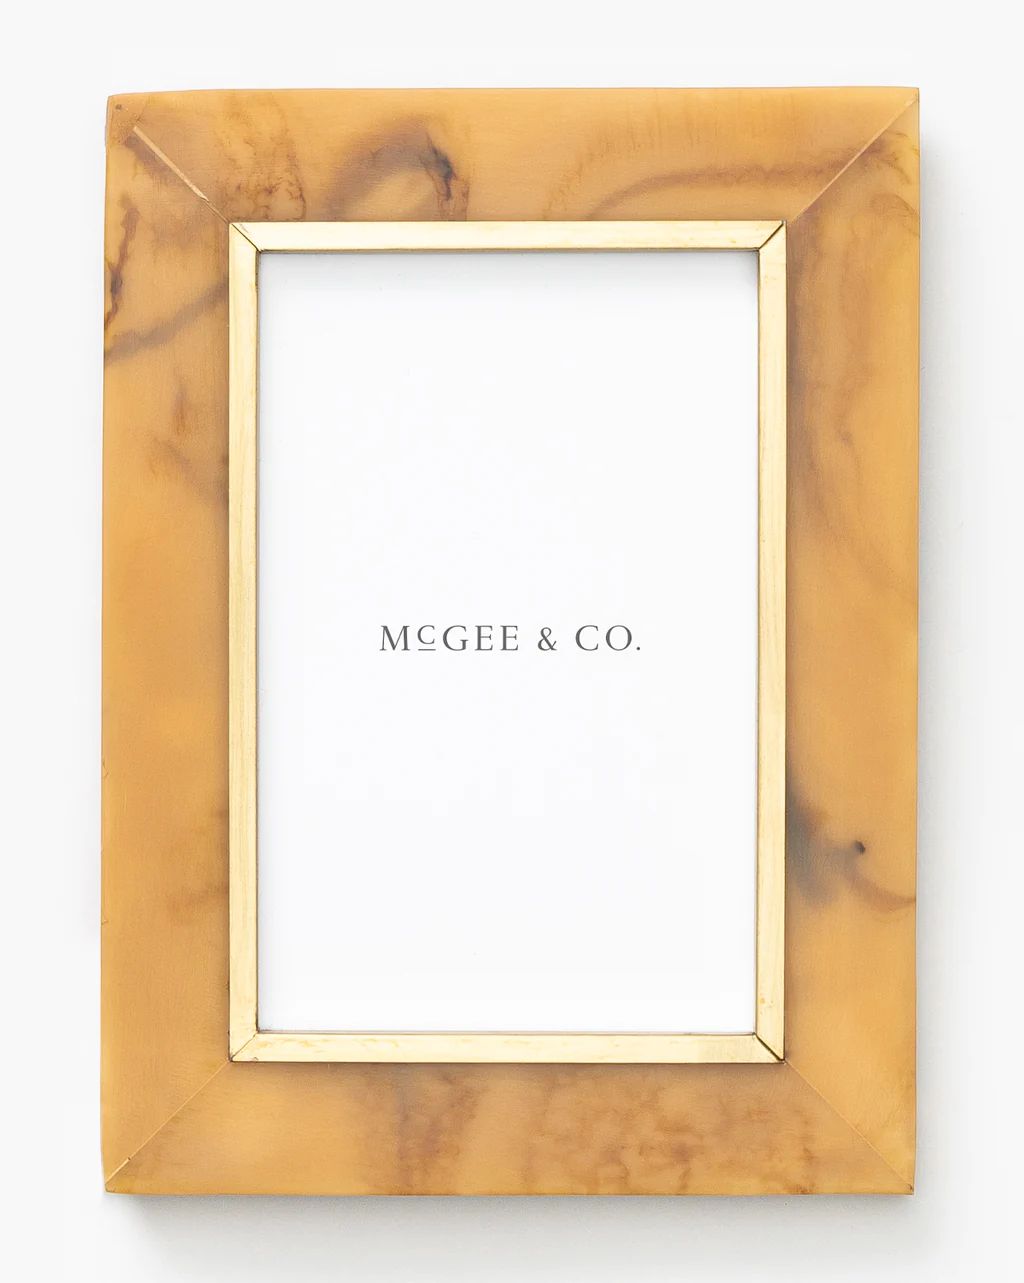 Horn Design Frame | McGee & Co.